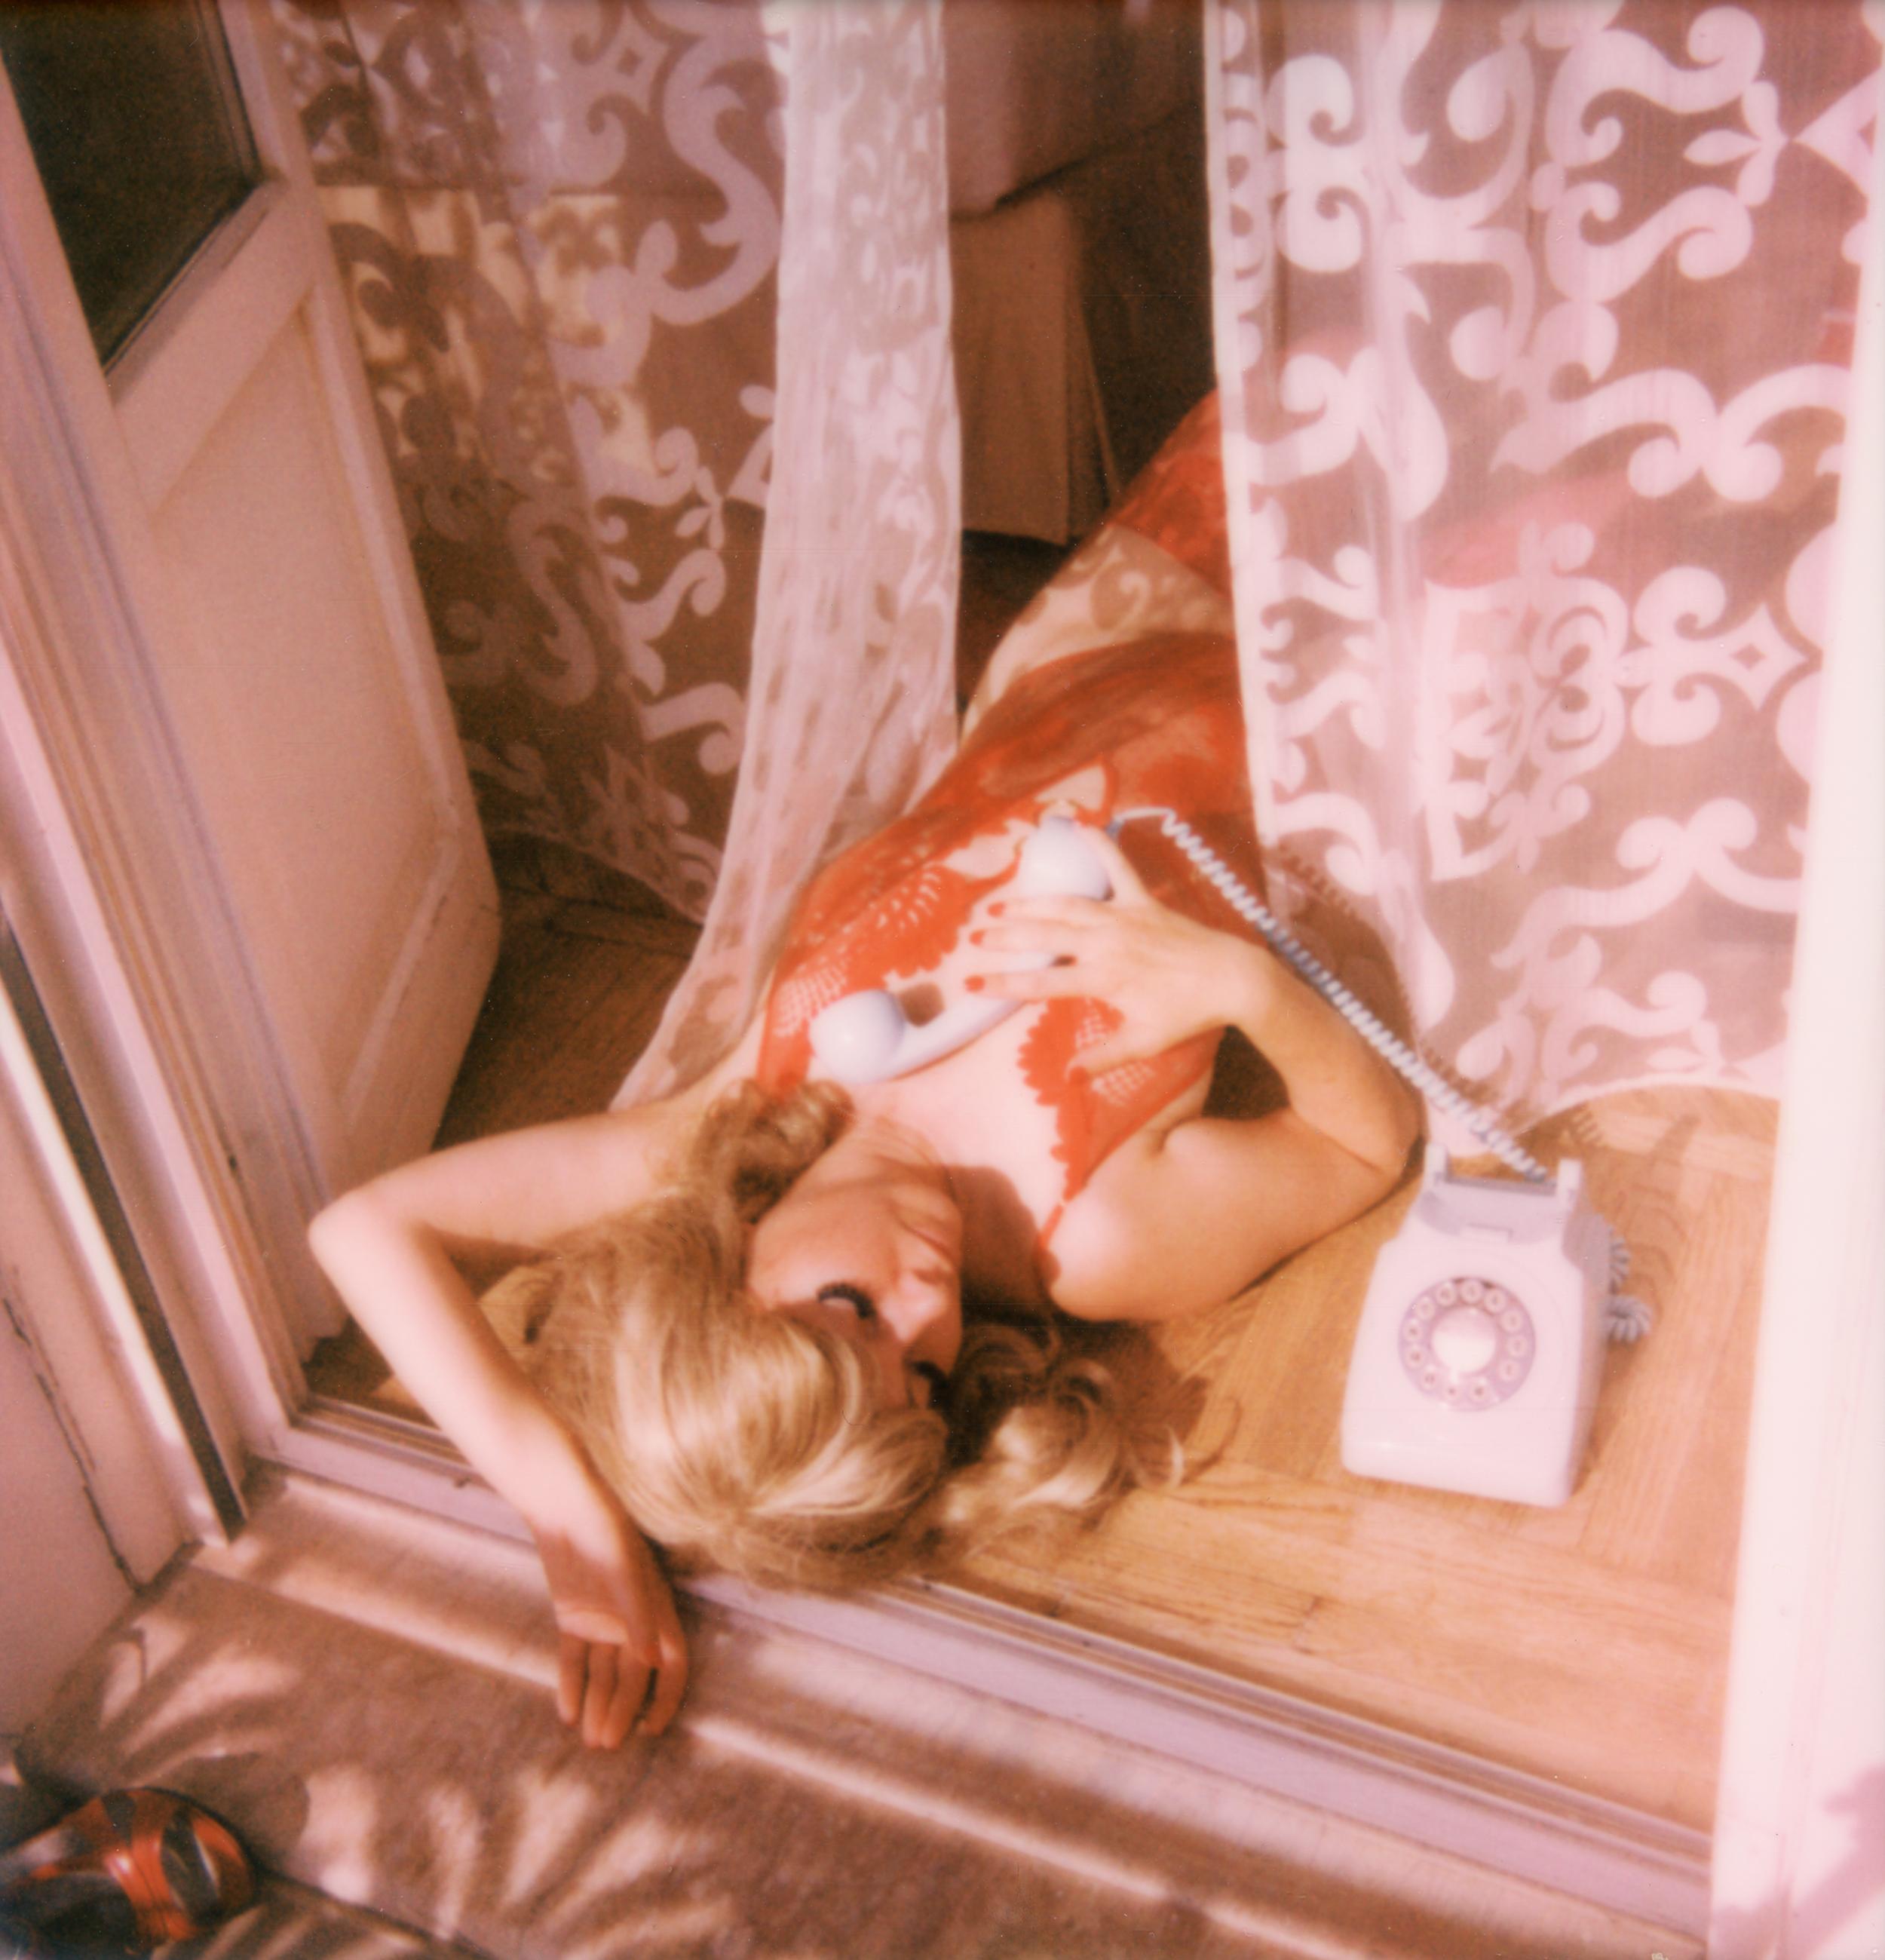 Morning Slumber - Contemporary, Polaroid, Woman, 21st Century, Nude, Psychiatry